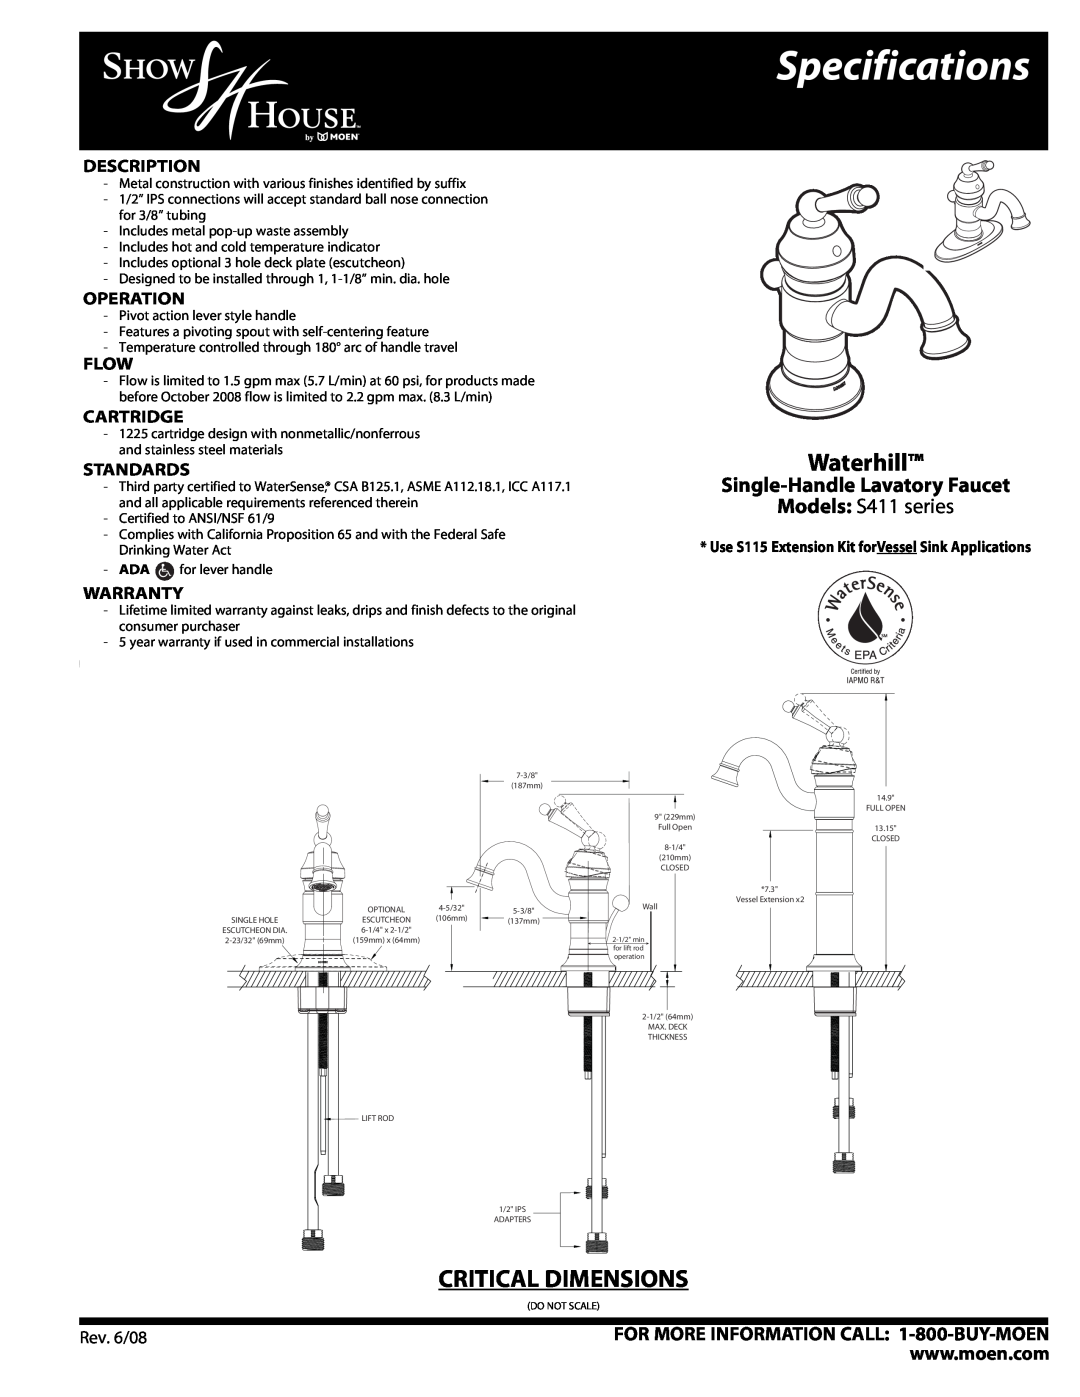 Moen S411 SERIES specifications Specifications, Waterhill, Critical Dimensions, Single-Handle Lavatory Faucet, Description 